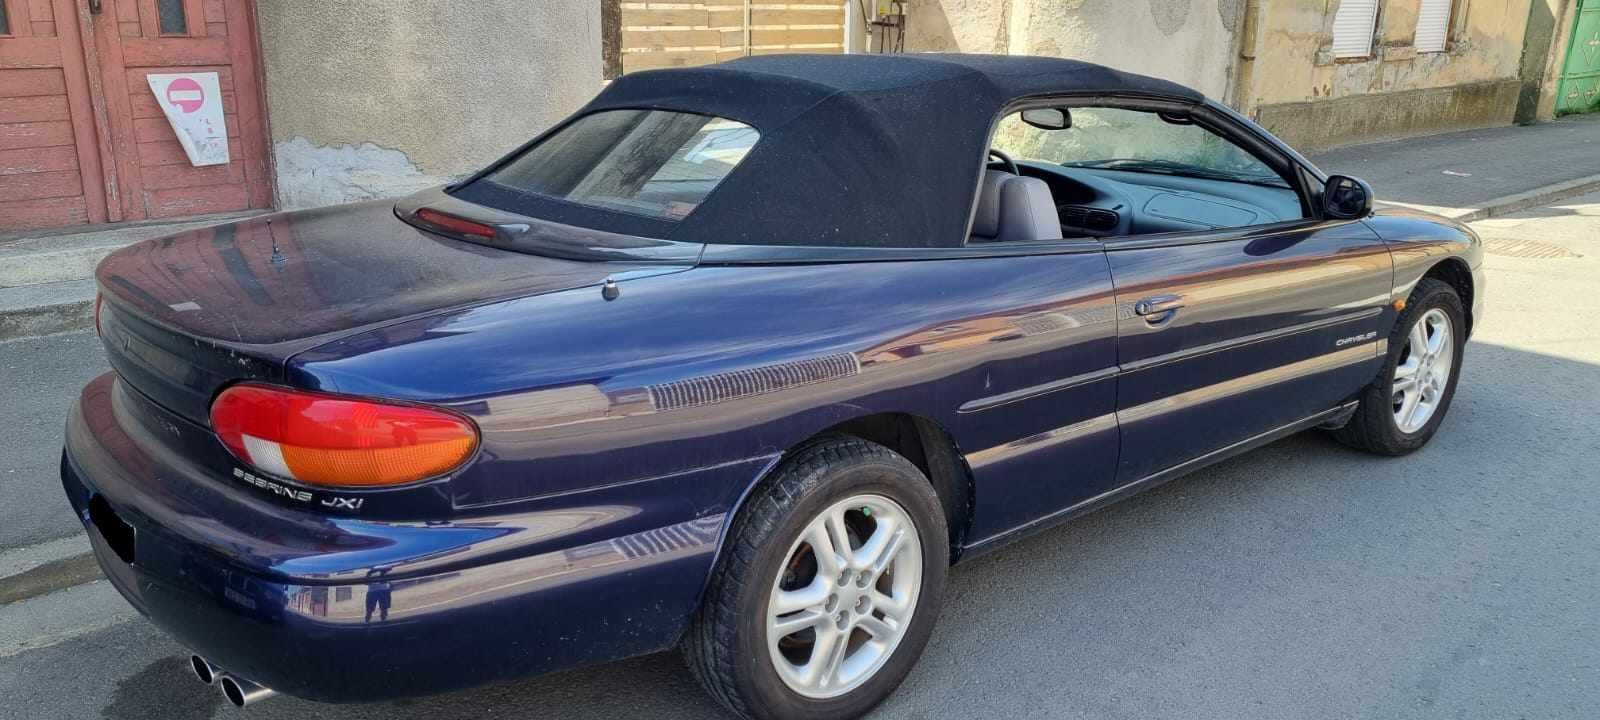 Chrysler Sebring 2.5 Benzina An 1997 Decapotabila Rulaj 50.000 km